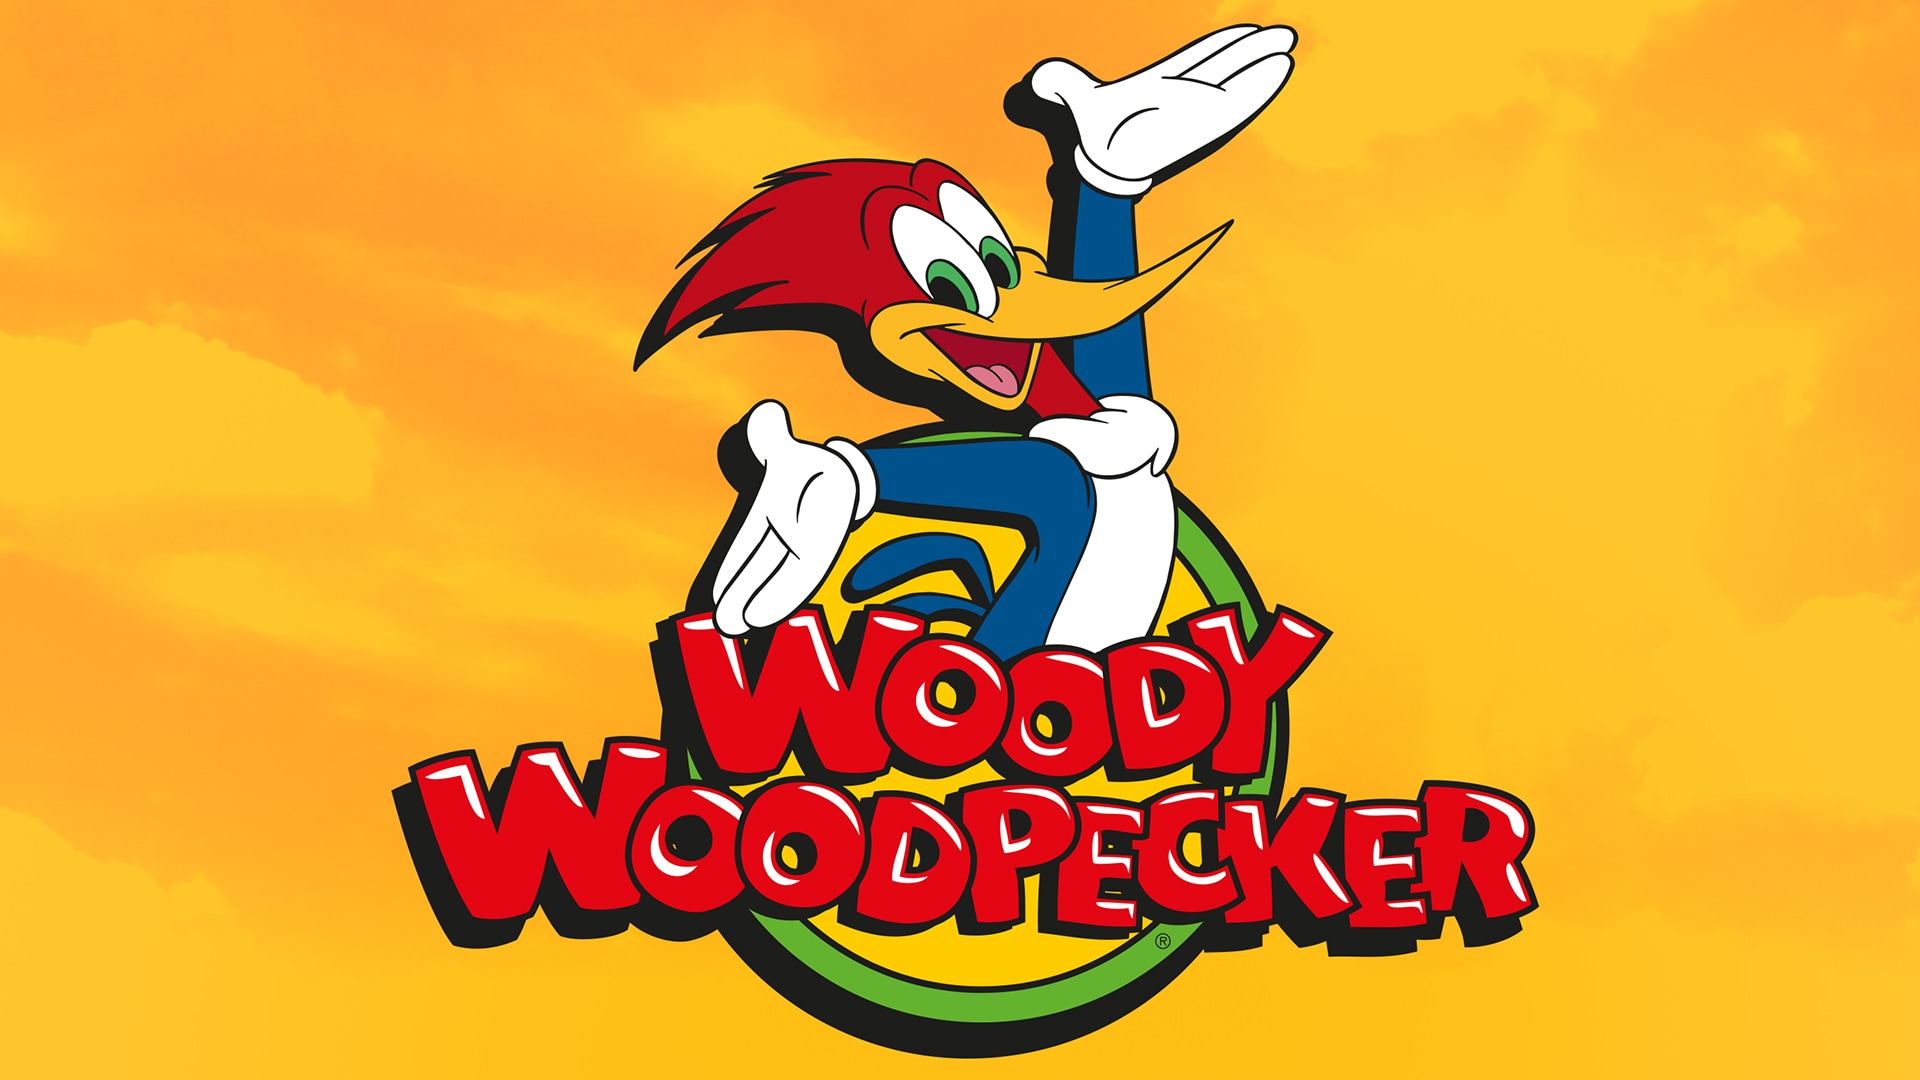 Woody Woodpecker Wallpapers